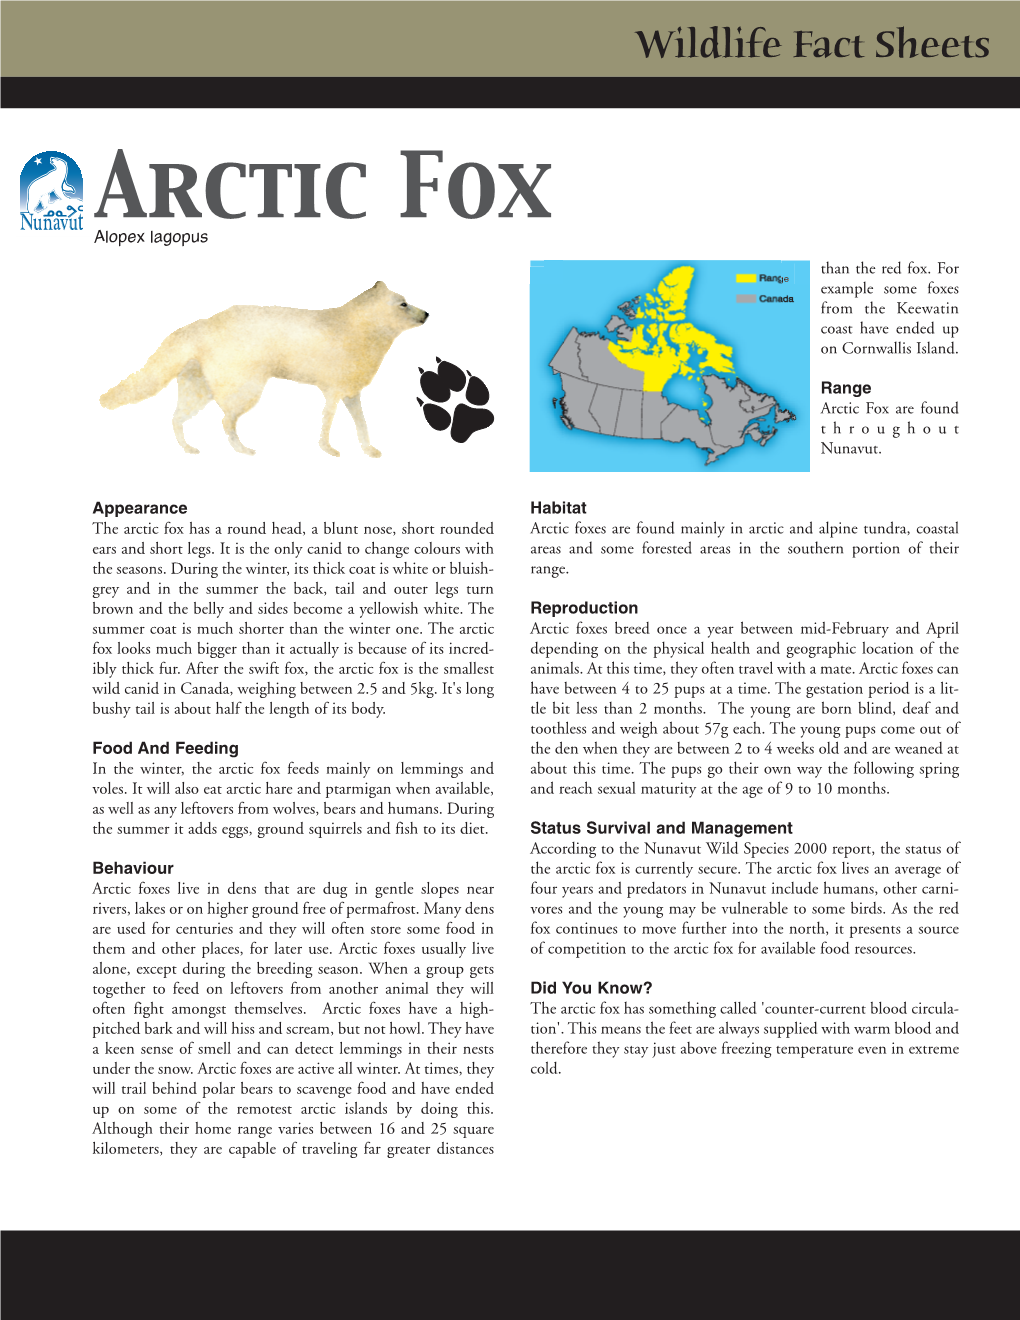 Arctic Fox Than the Red Fox